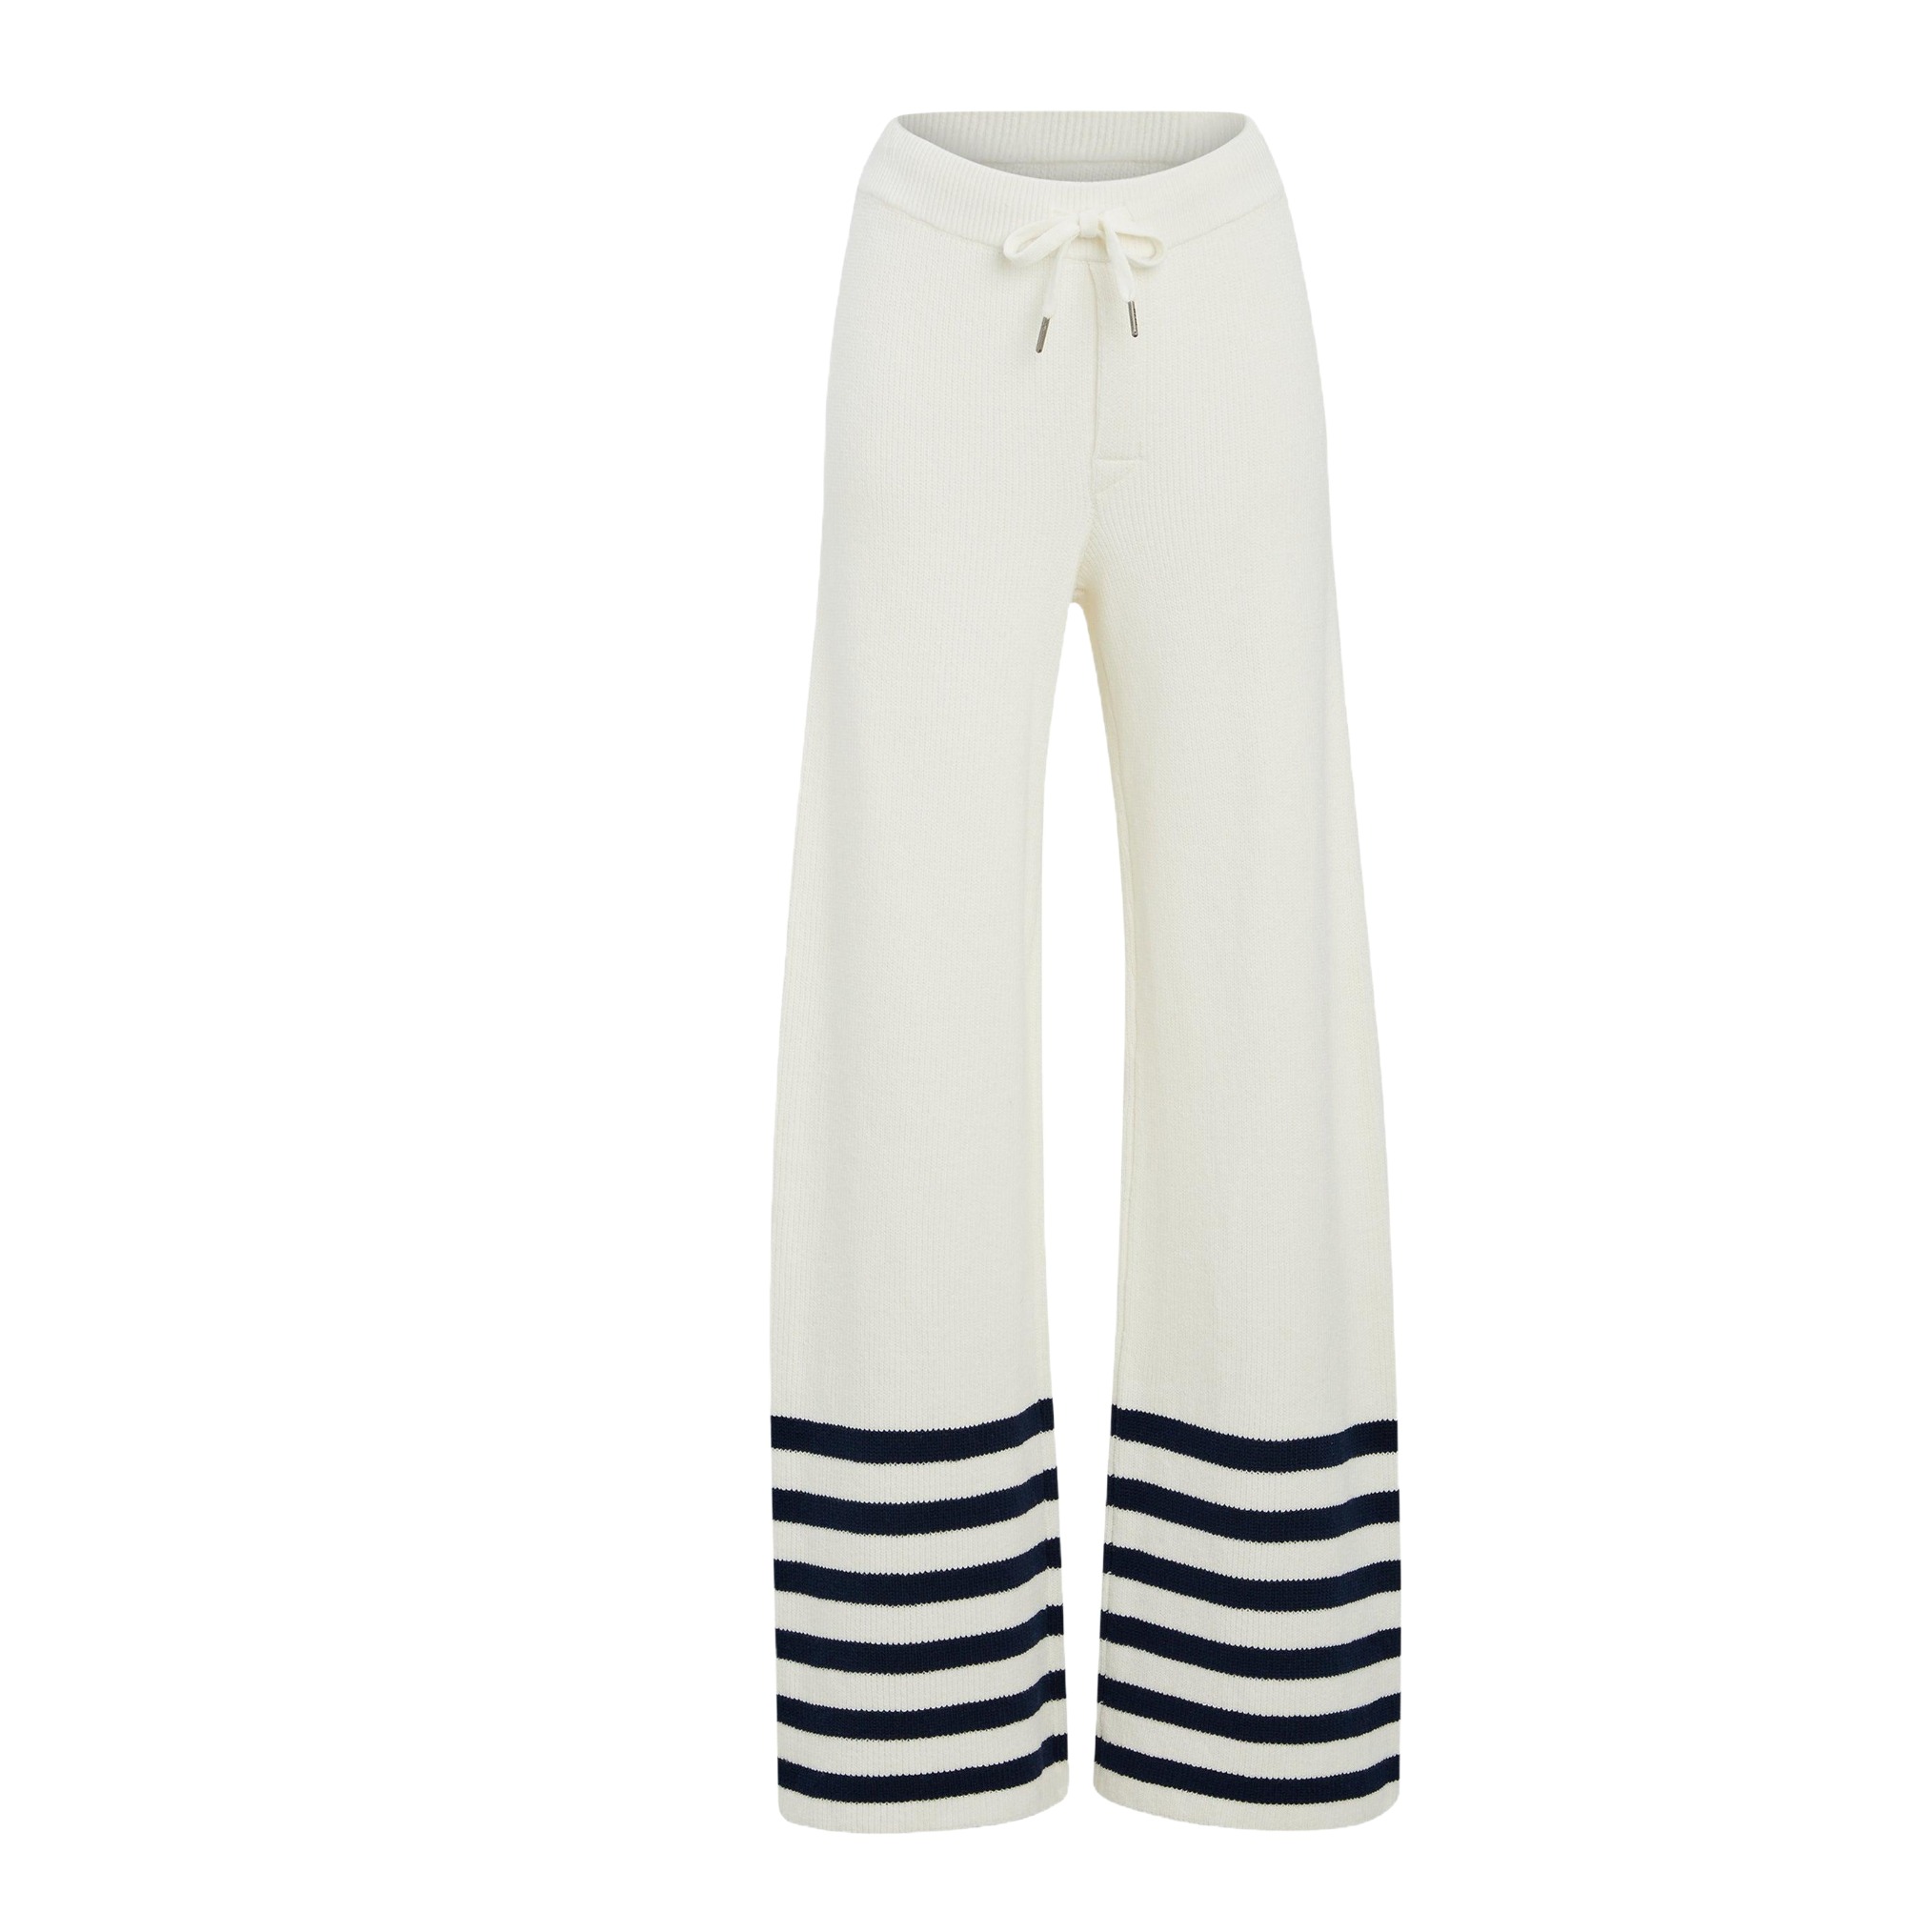 Women’s Cotton Blended Plain Knitting White and Navy Pants